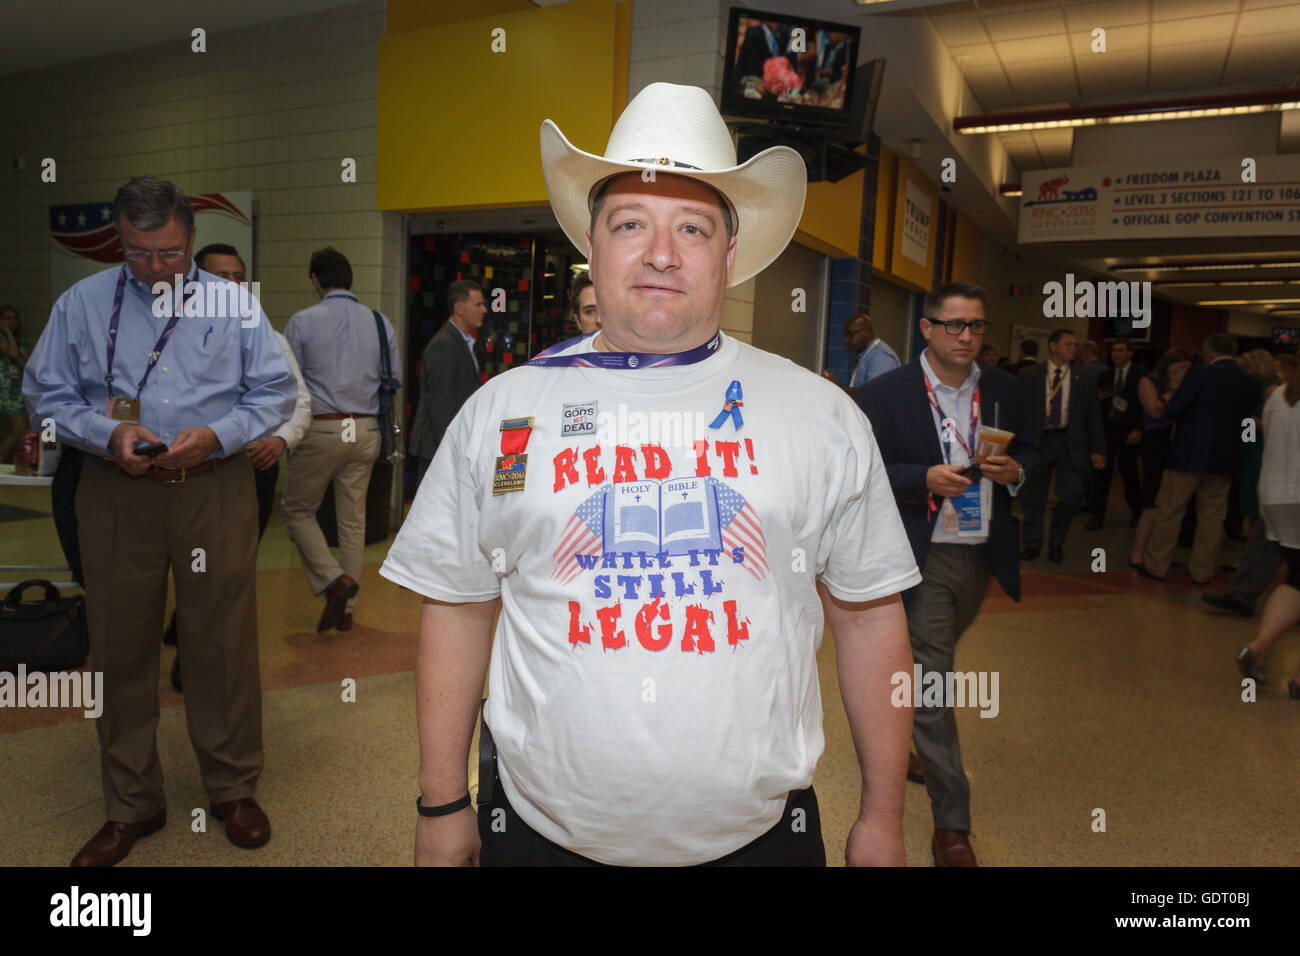 Cleveland, Ohio, USA; July 20, 2016: A Texas delegate, Republican National Convention. (Philip Scalia/Alamy Live News) Stock Photo